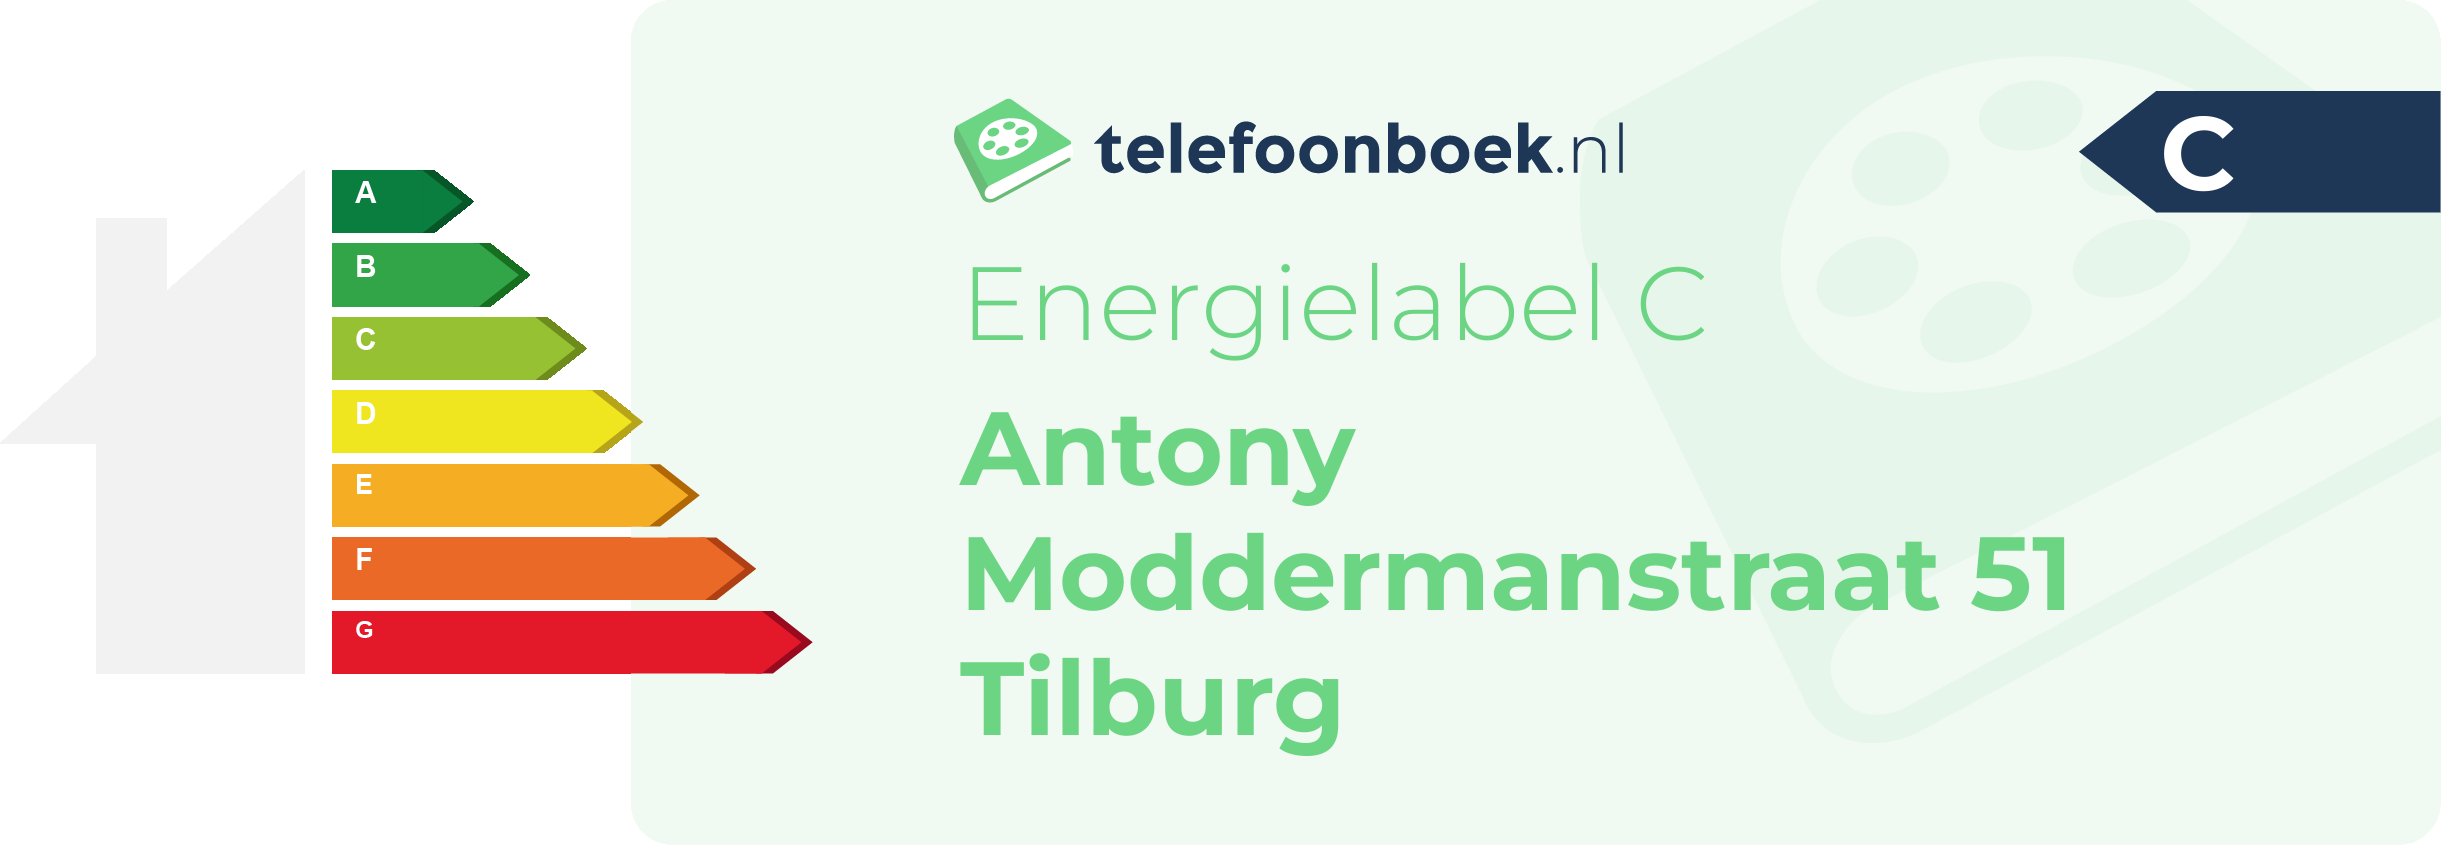 Energielabel Antony Moddermanstraat 51 Tilburg